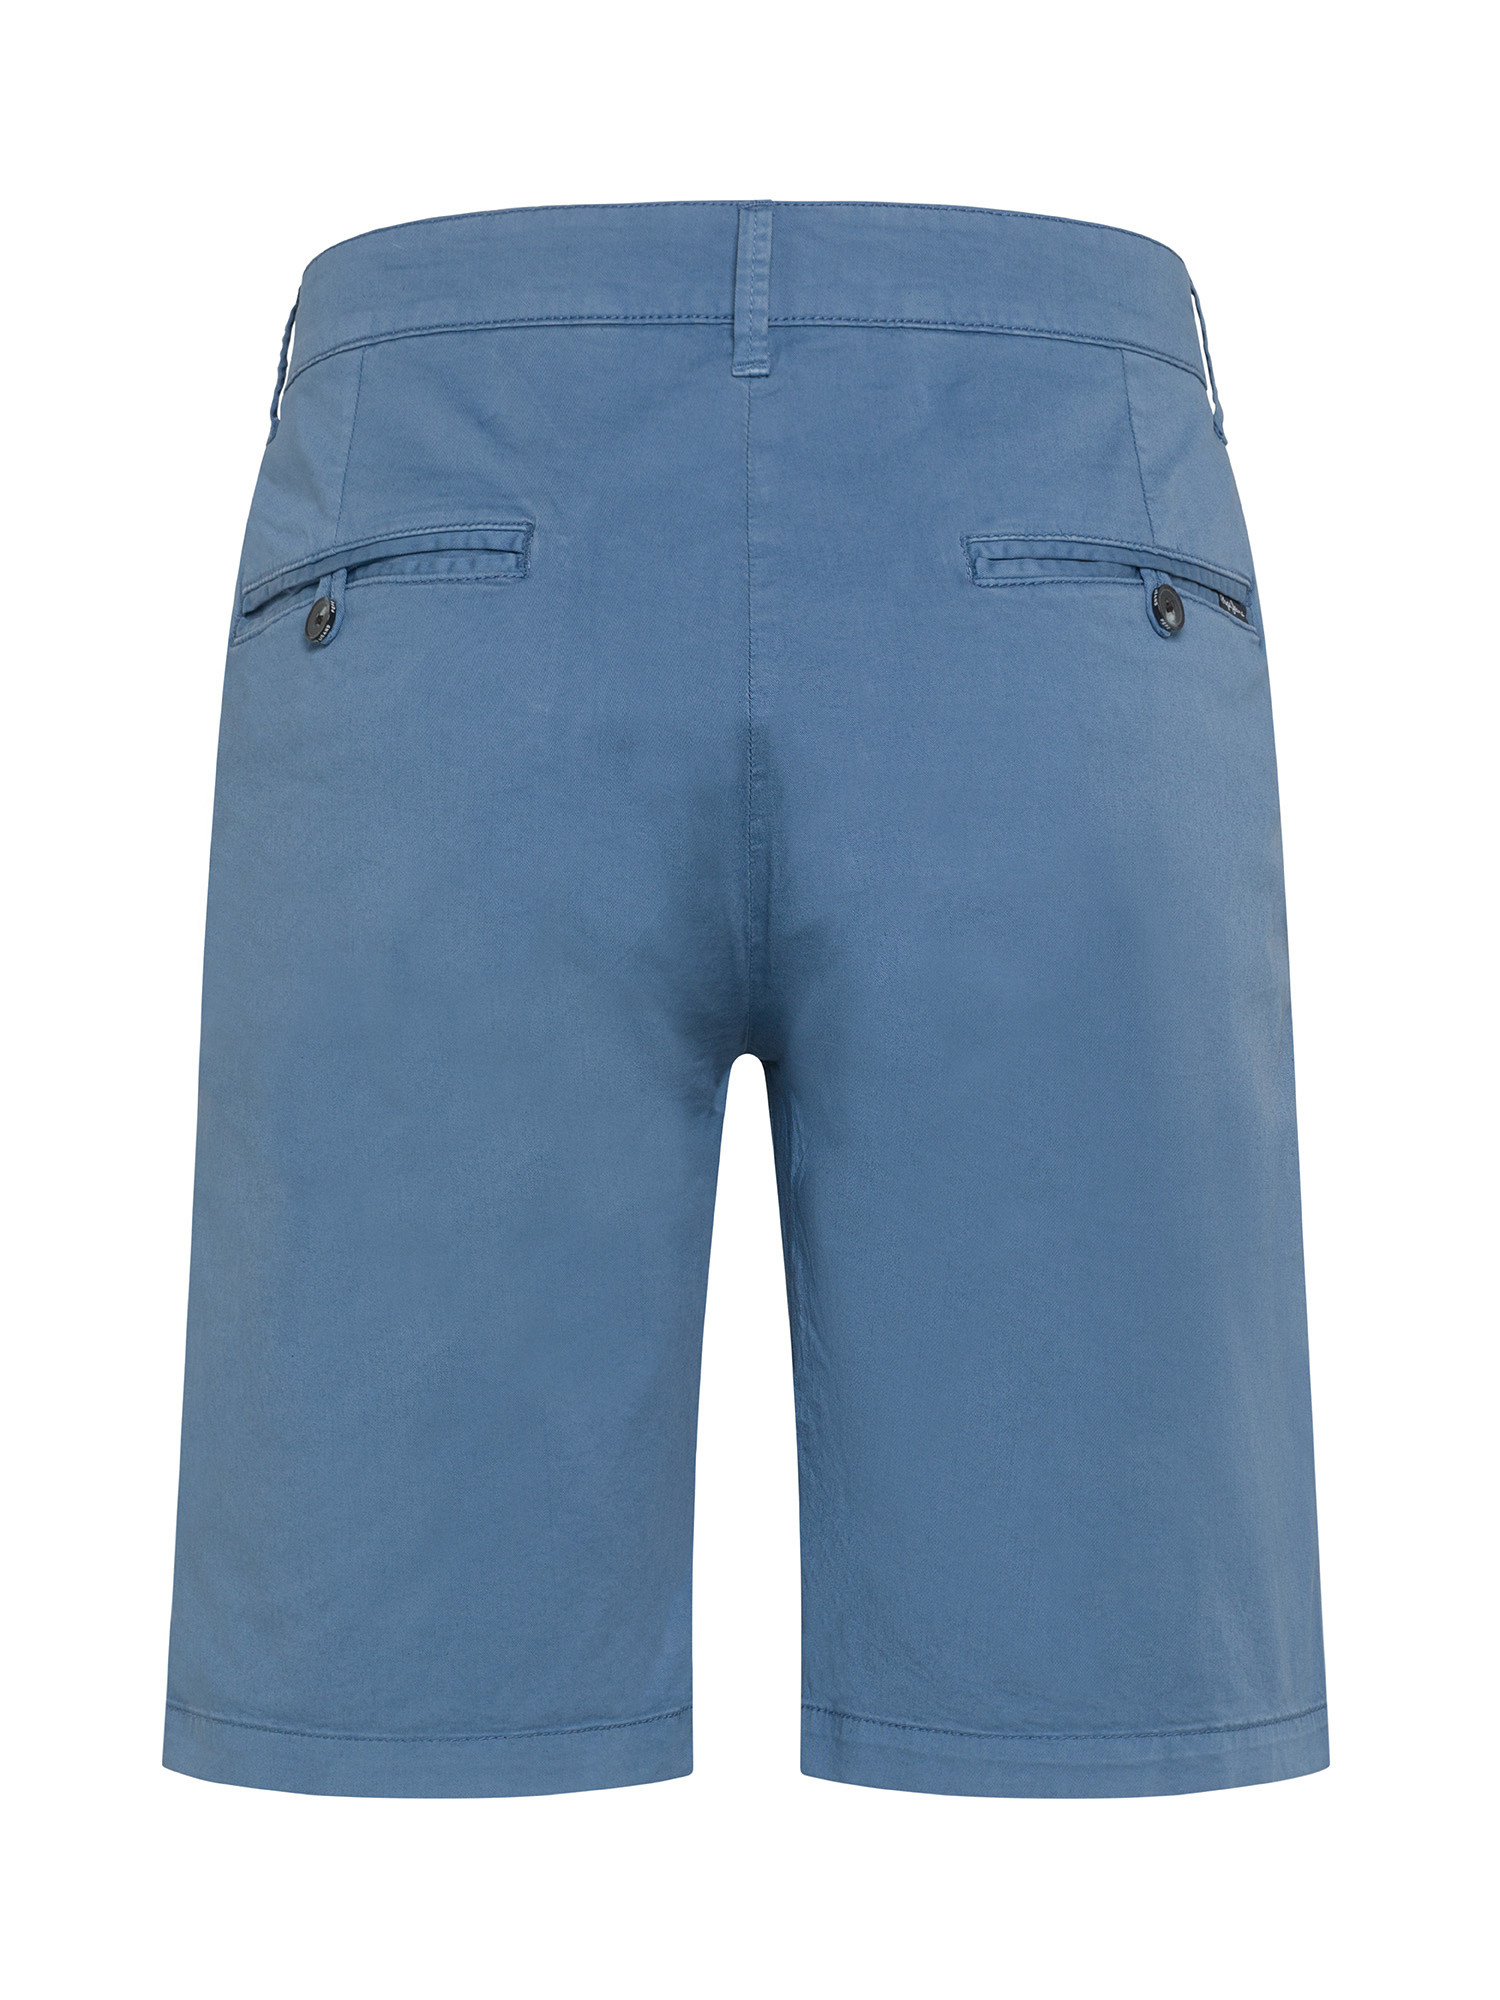 Pepe Jeans - Bermuda in cotone elasticizzato, Bianco, large image number 1